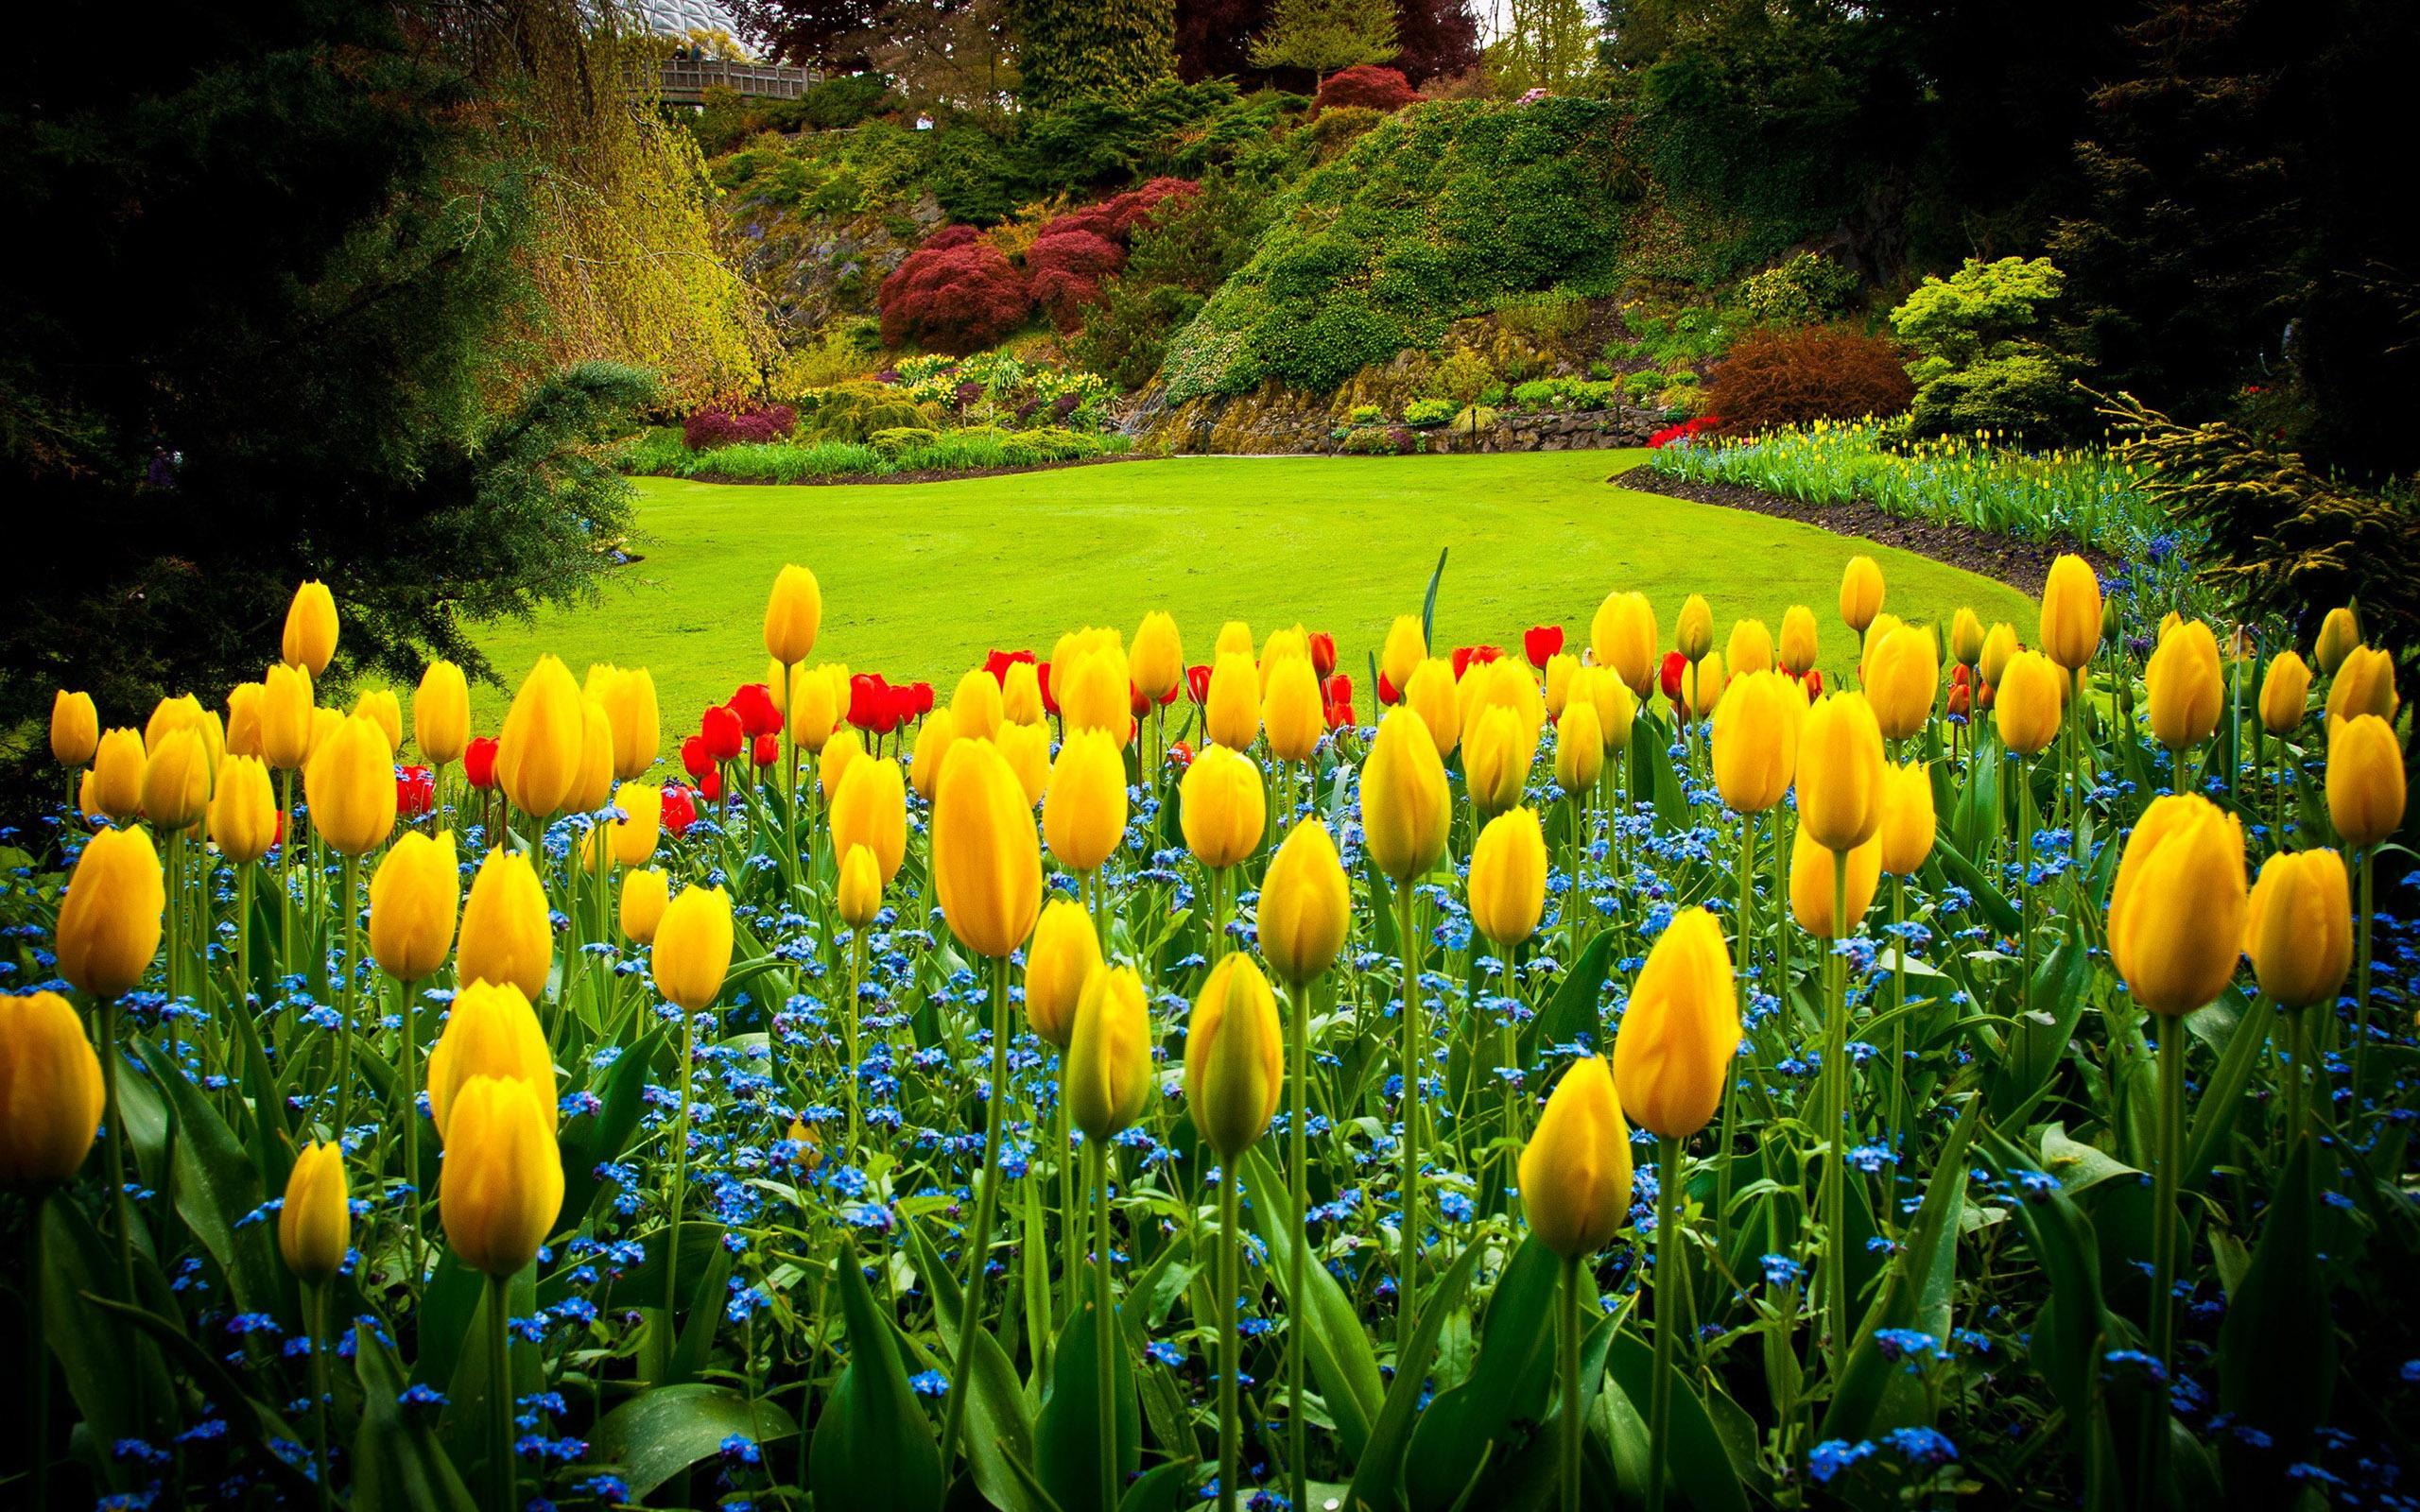 Hd Yellow Tulips In The Garden Wallpaper - Good Morning Flower Garden - HD Wallpaper 